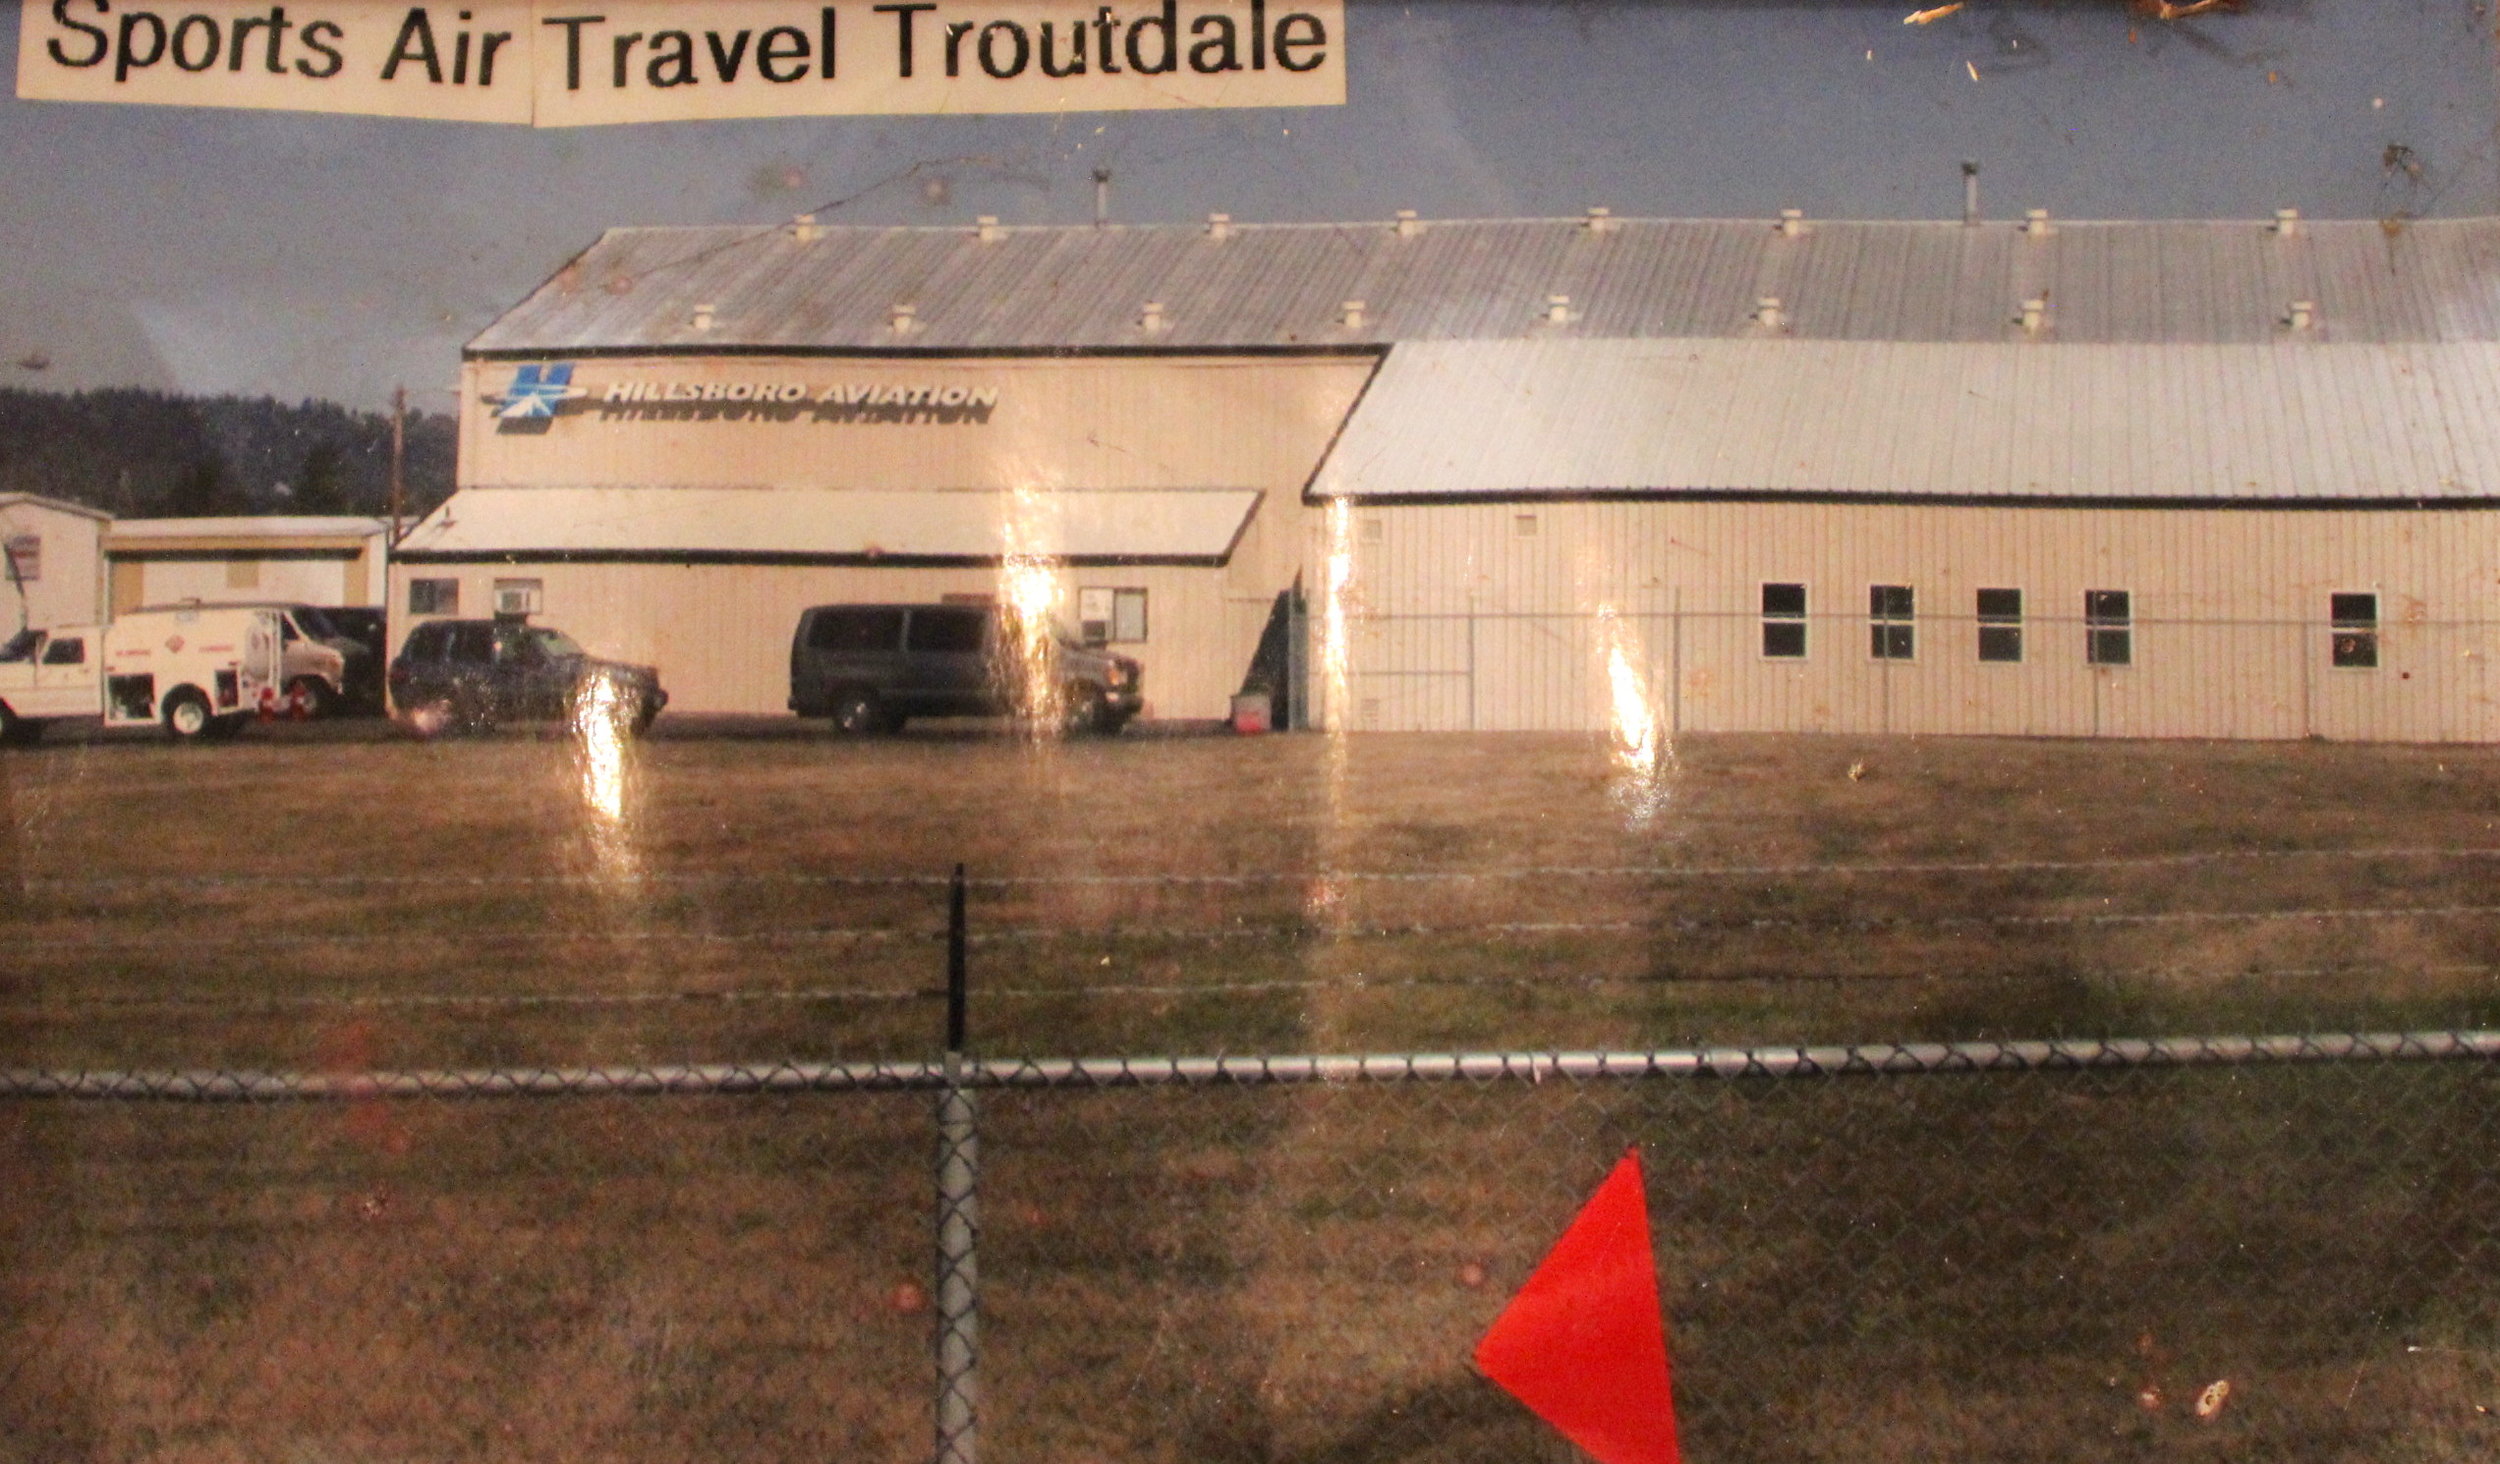 Sports Air Travel Troutdale.JPG